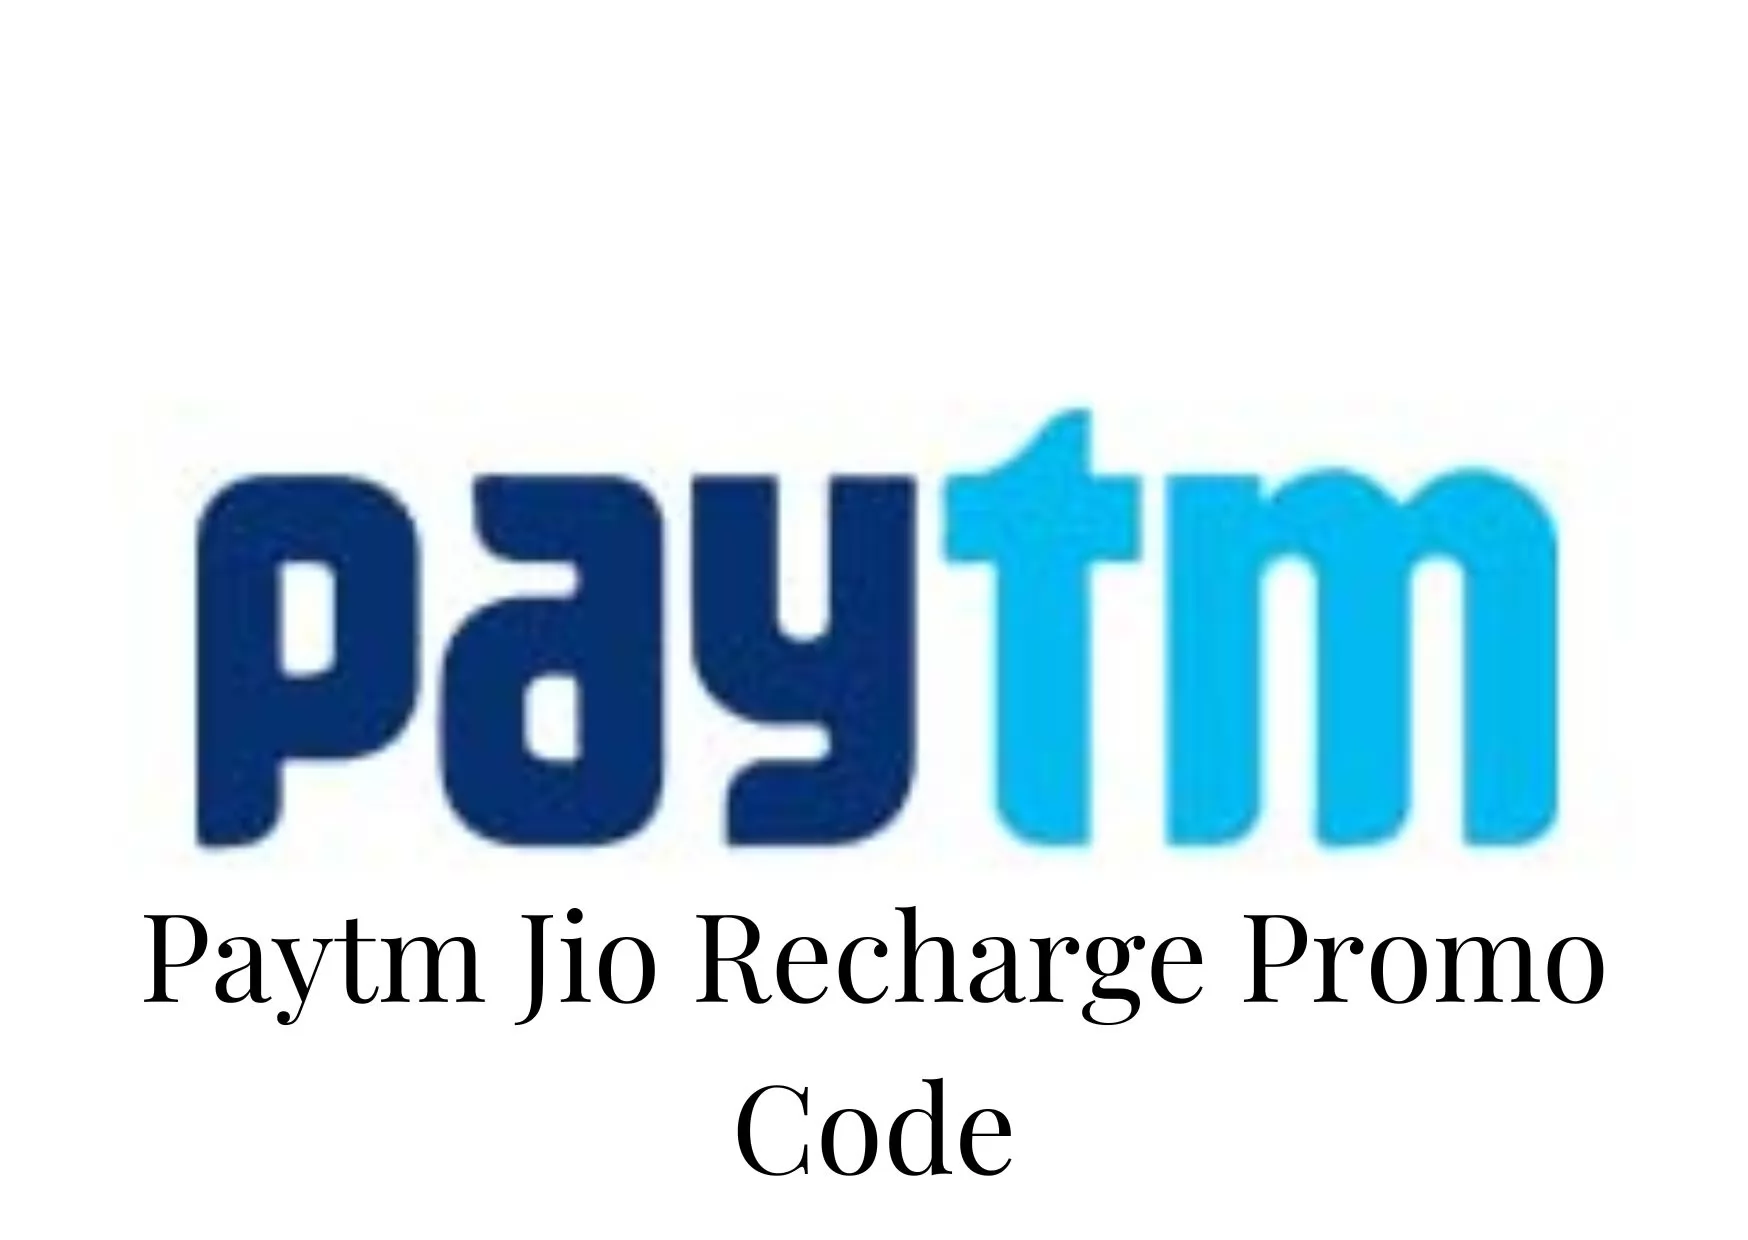 Paytm Jio Recharge Promo Code